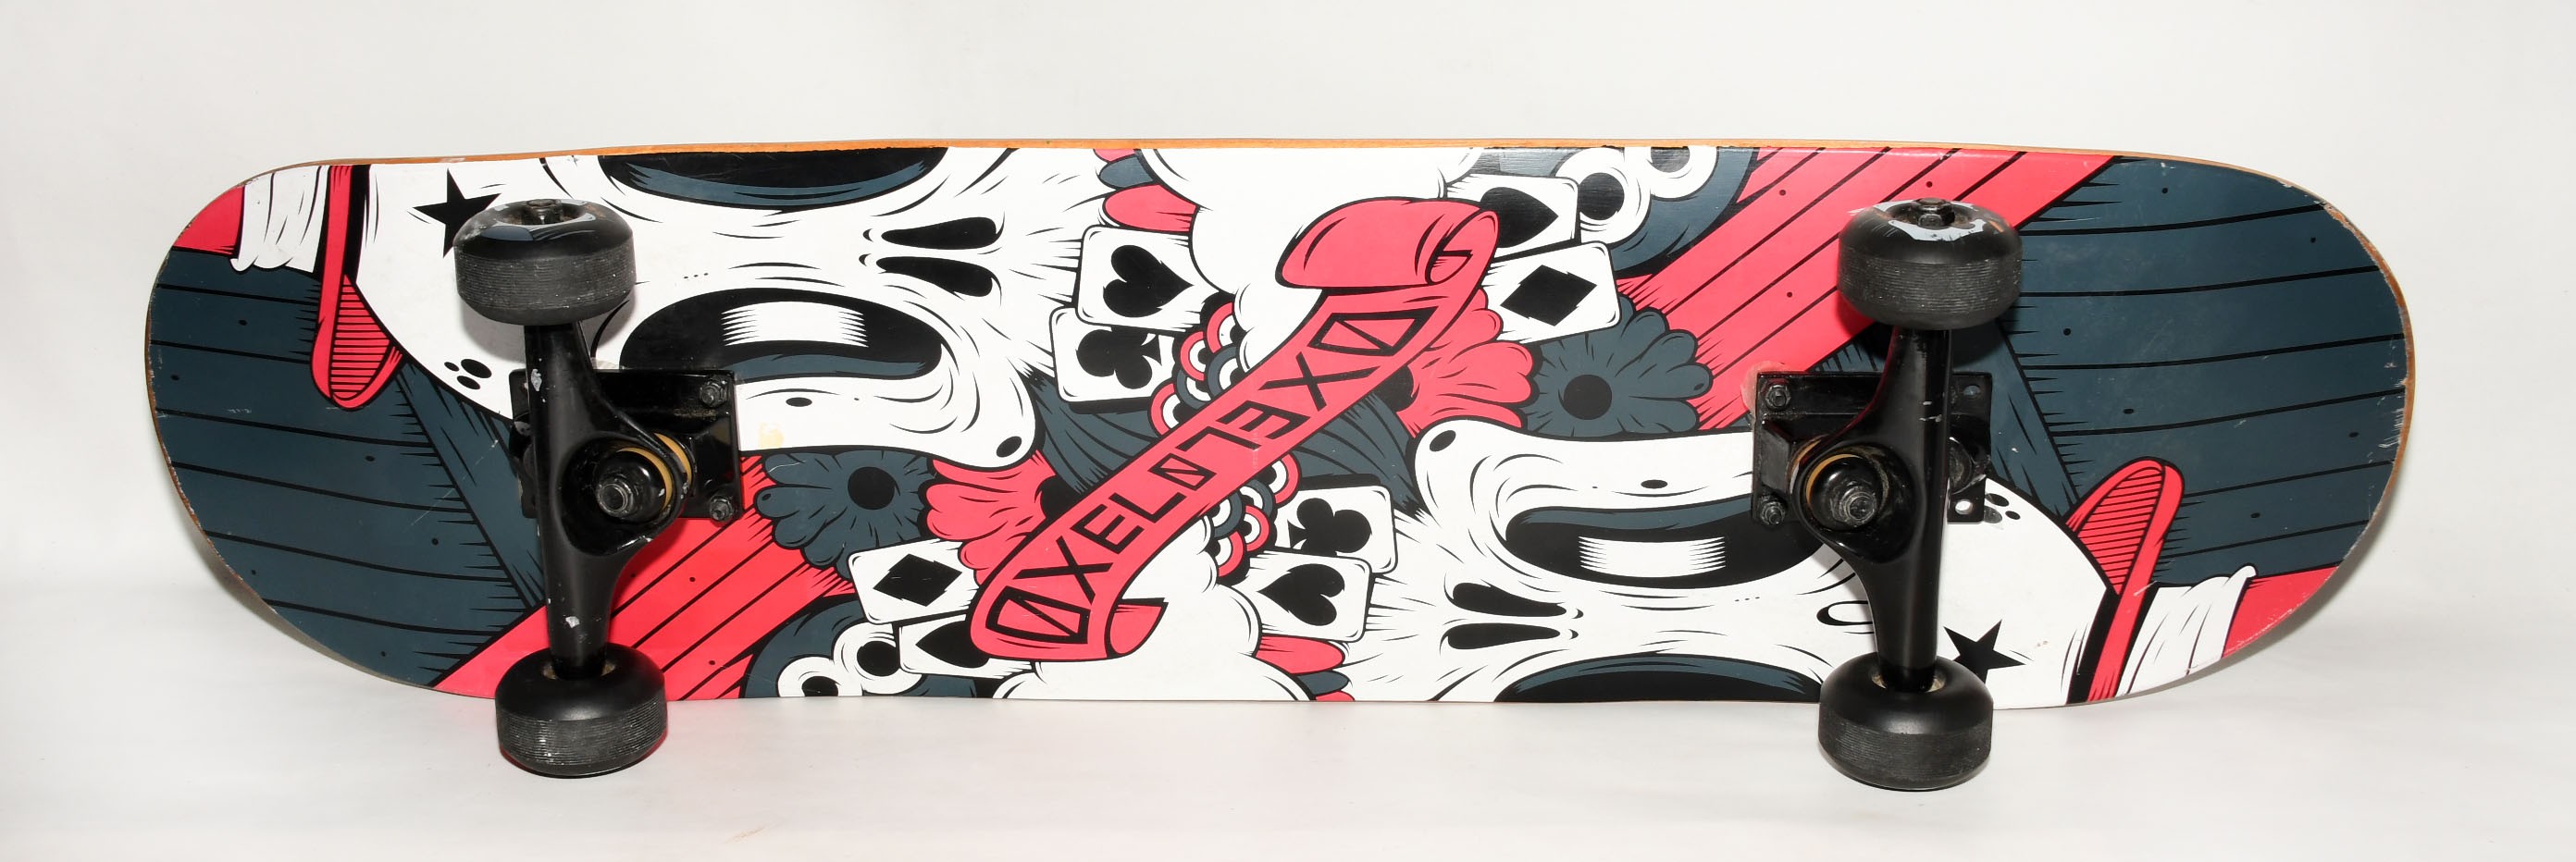 Patineta Skate para adulto Oxelo DK500 tamaño 8,25 diseño gráfico de  @tomalater - Decathlon